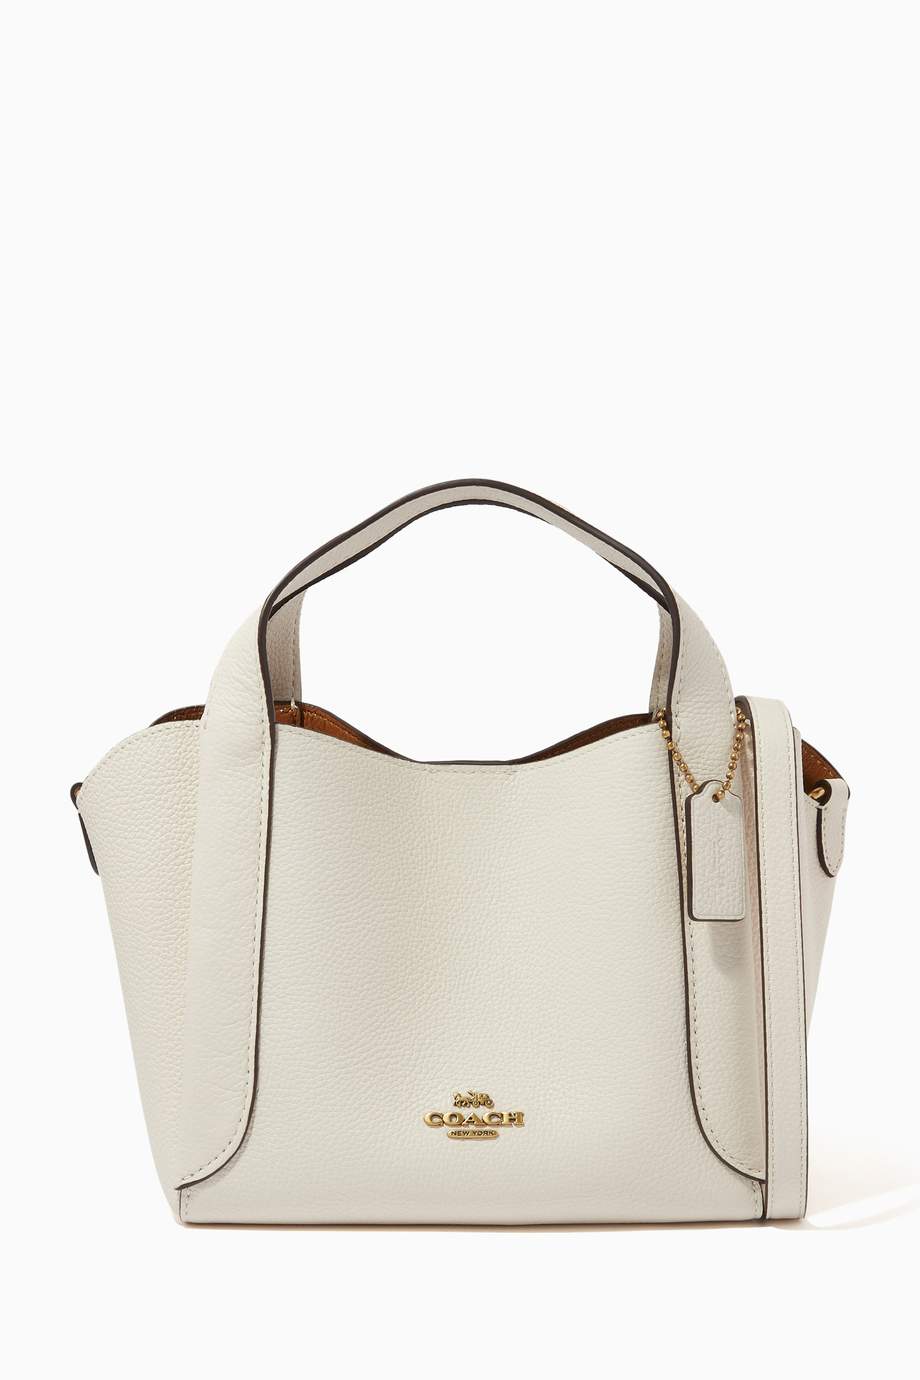 Shop Coach White Hadley Hobo 21 Bag in Pebble Leather for Women | Ounass UAE